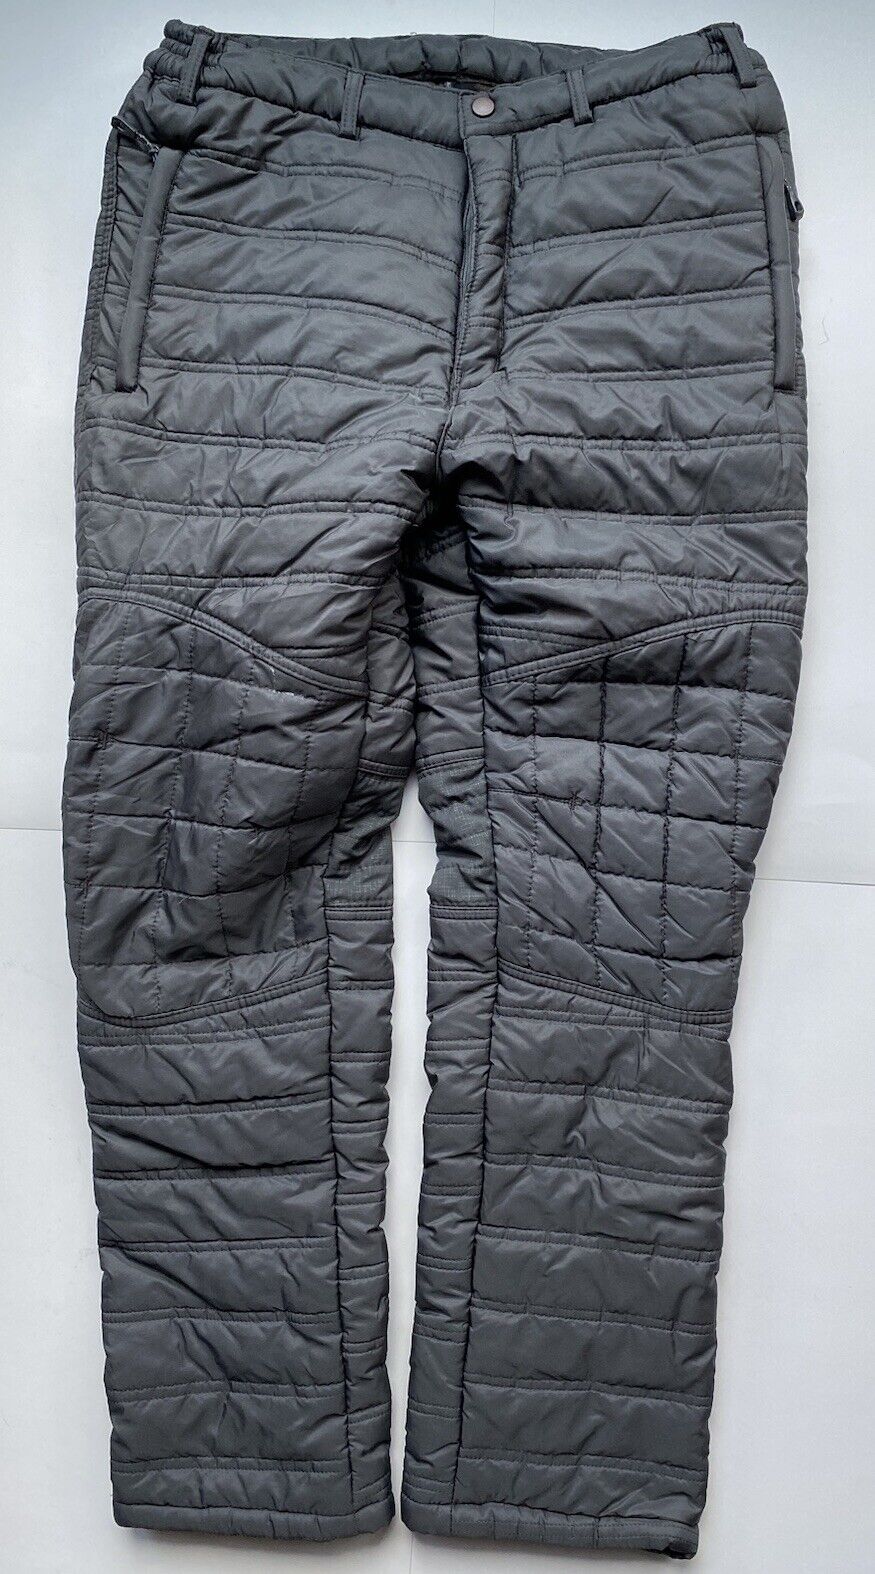 Wextreme Gray Snow Ski Skateboard Pants Mens Size 34 x 30 Ski Zipper Pockets